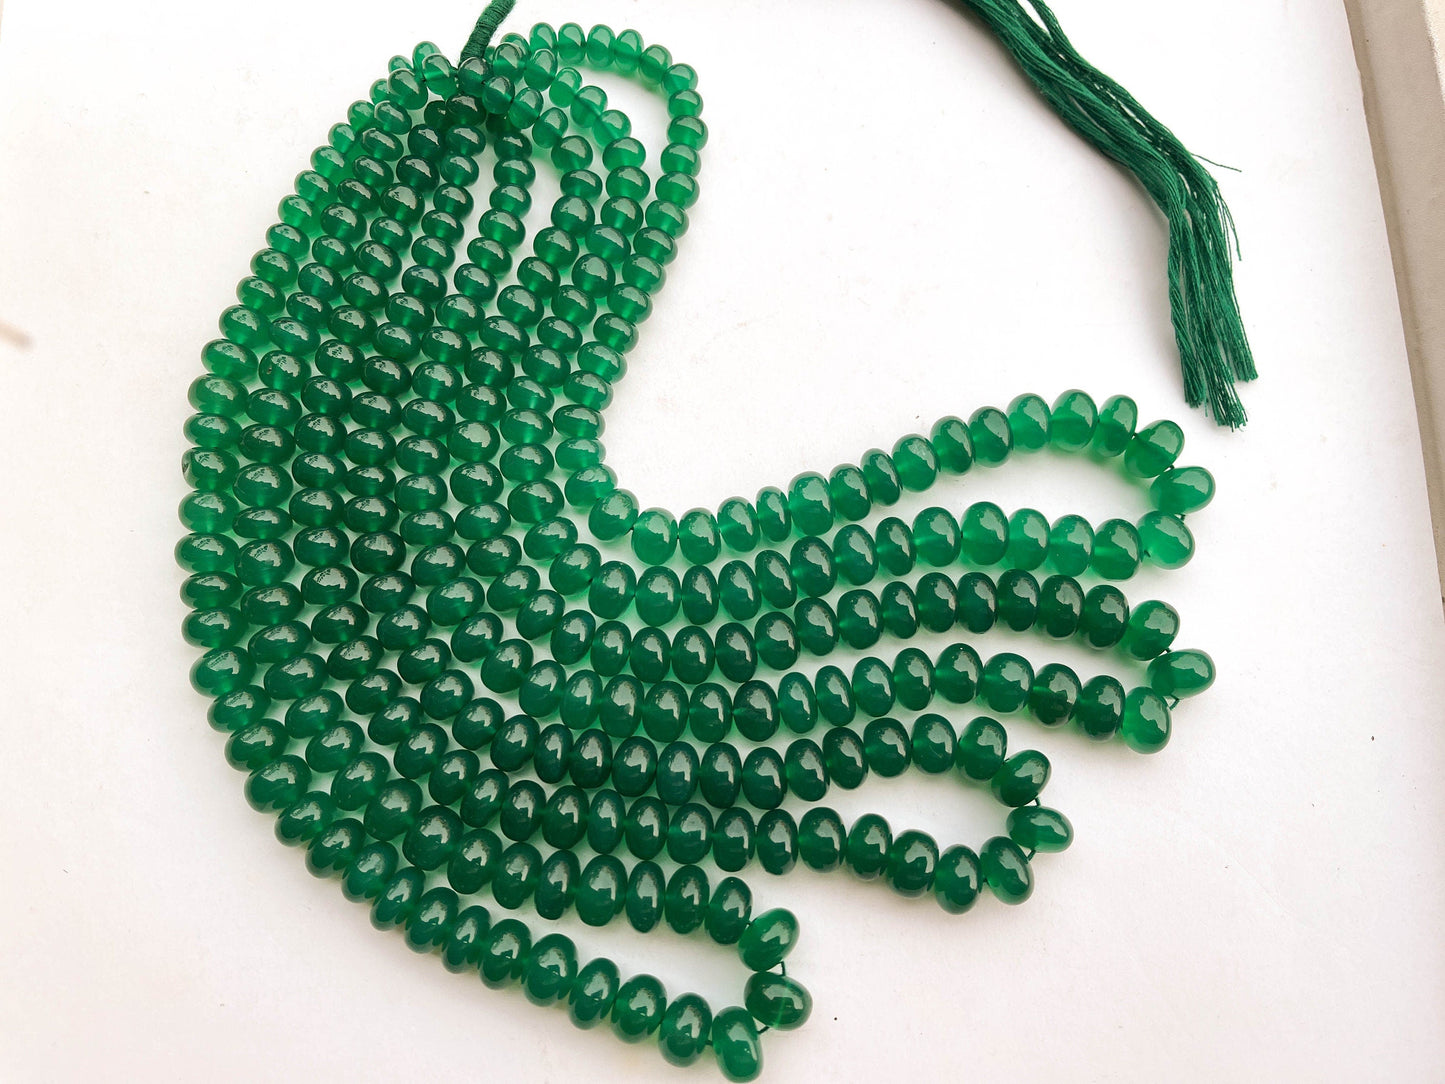 AAA+ Green Onyx Smooth Rondelle Shape Beads, Green Onyx Smooth rondelle Beads, 7mm to 10mm, 16 Inch String, Green Onyx Beads Beadsforyourjewelry